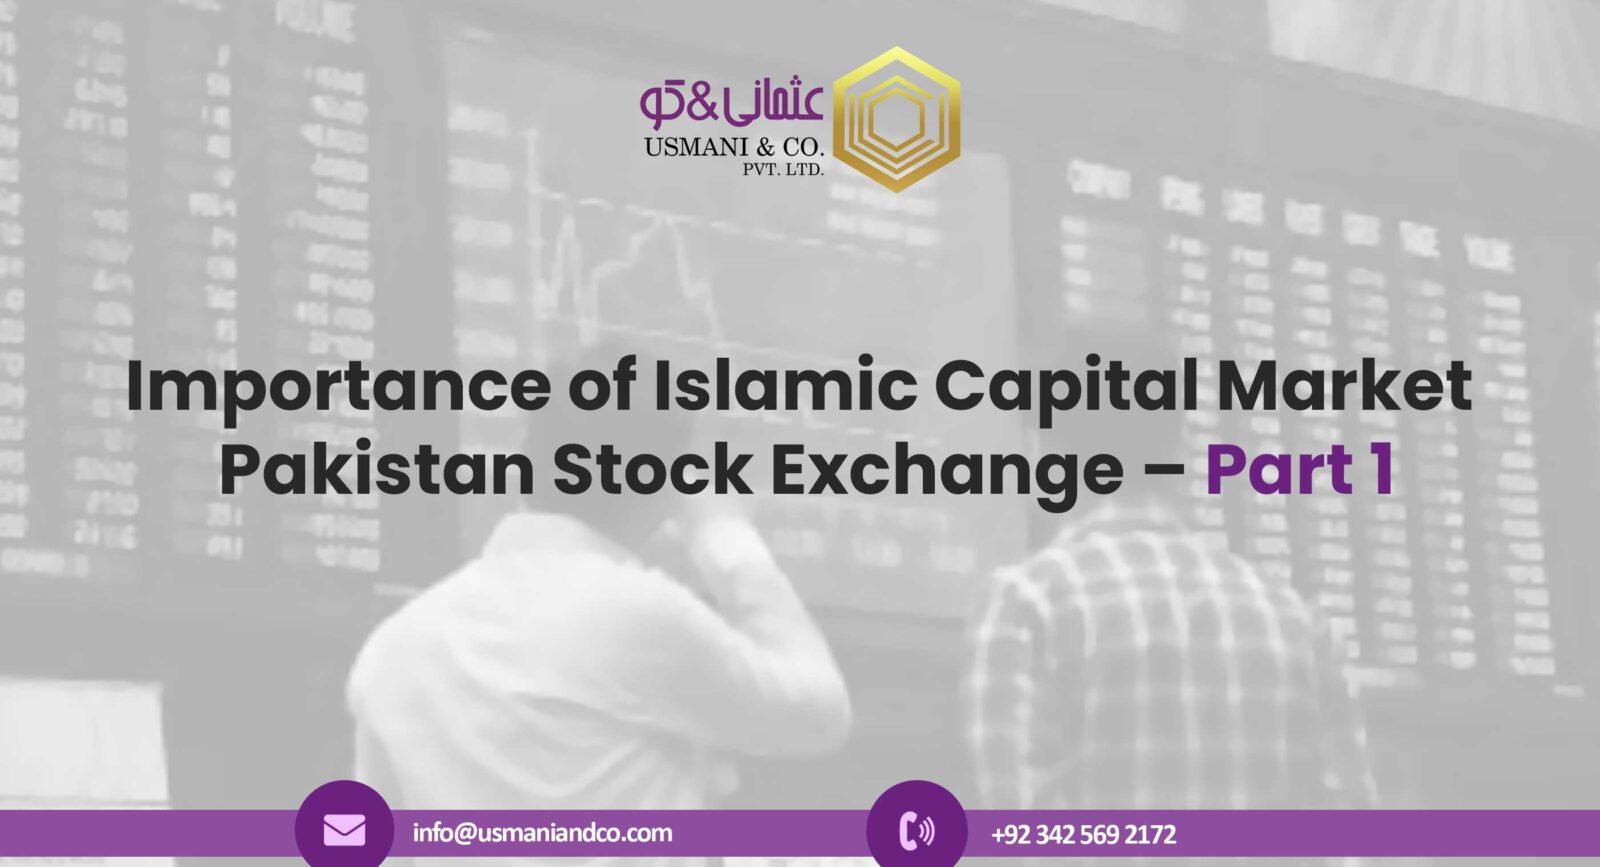 Importance of Islamic Capital Market - Pakistan Stock Exchange – Part 1